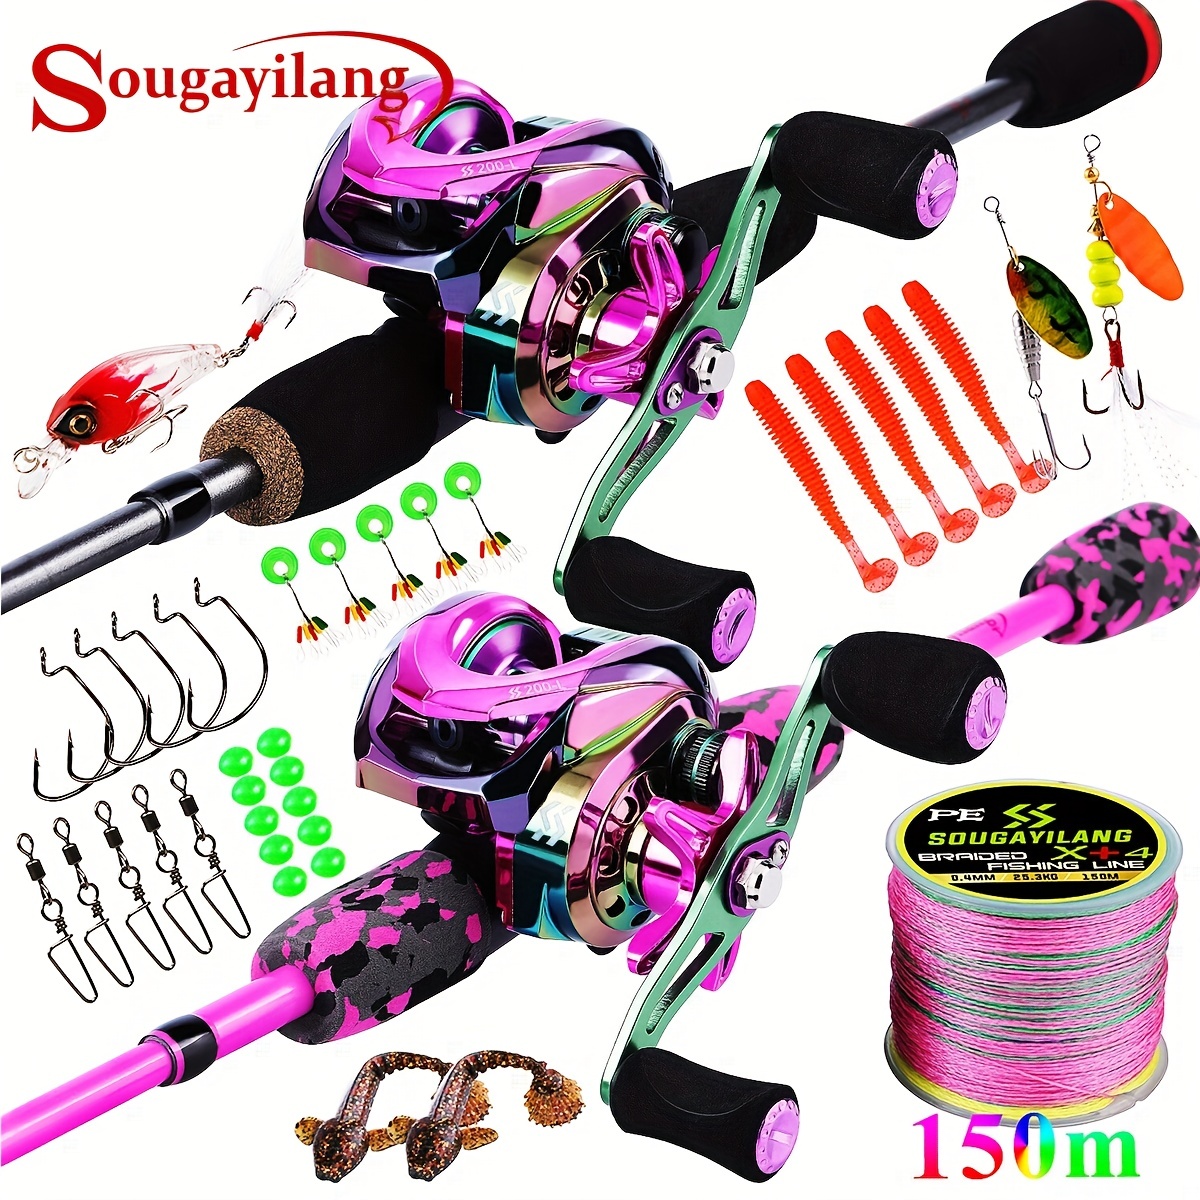 Sougayilang Fishing Rod Reel Tackle Set, Including 5-Section 5.9ft/180cm  Fishing Rod &12+1BB Colorful Baitcasting Reel & 160yds/146m X4 PE Fish Line  